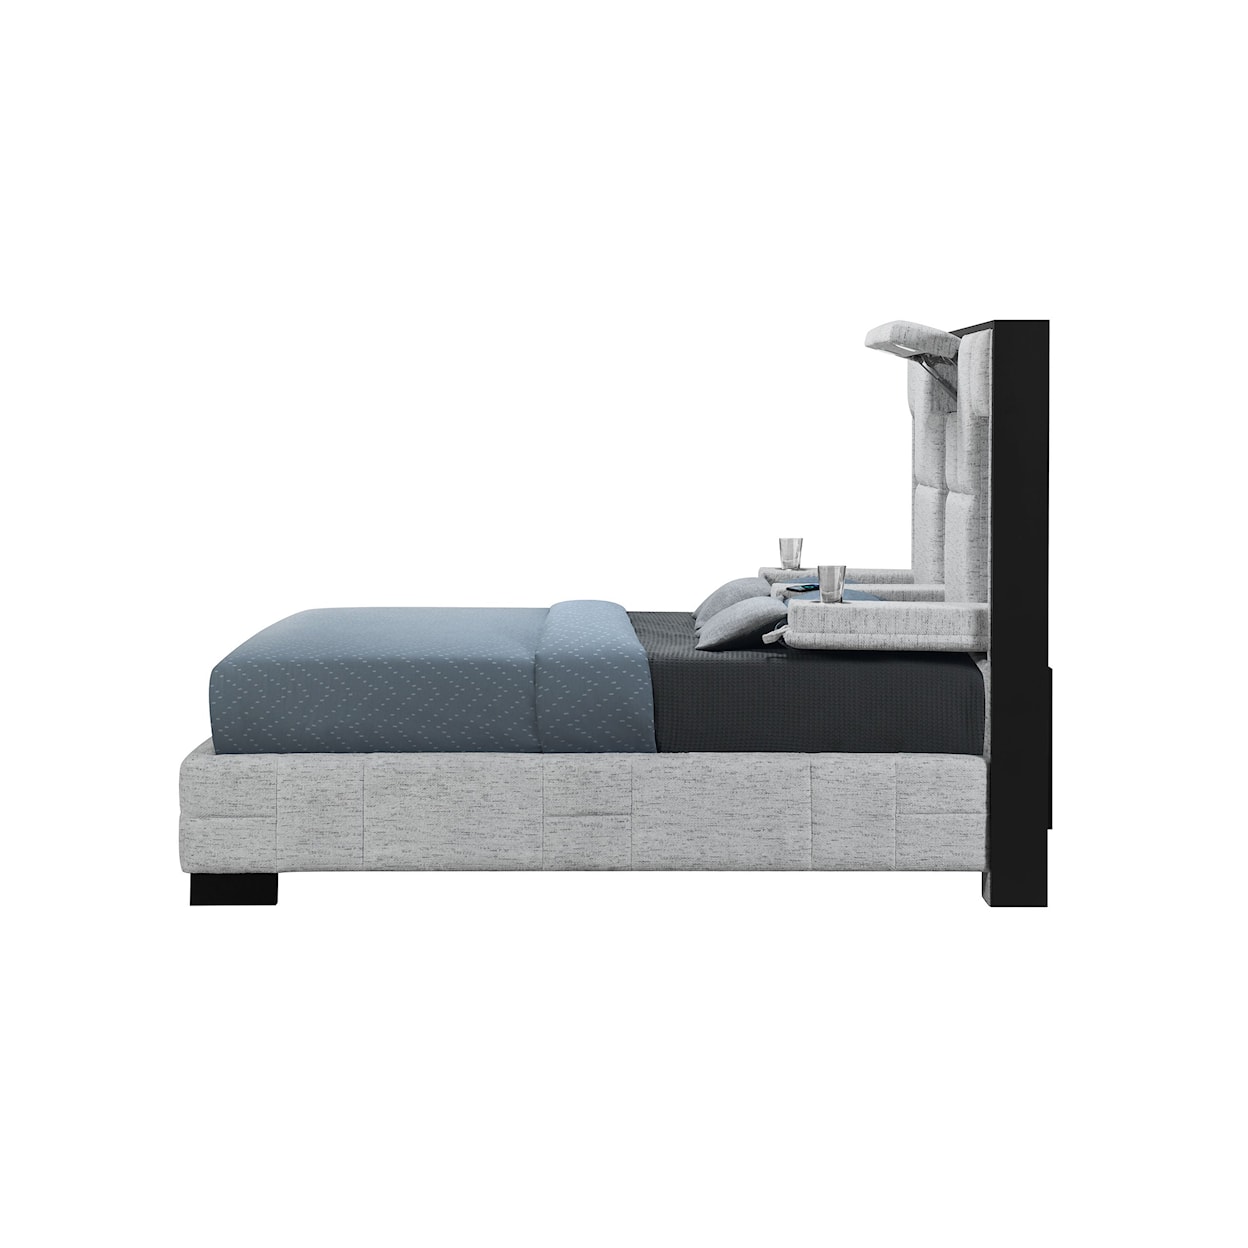 Global Furniture Oscar Grey Queen Bed